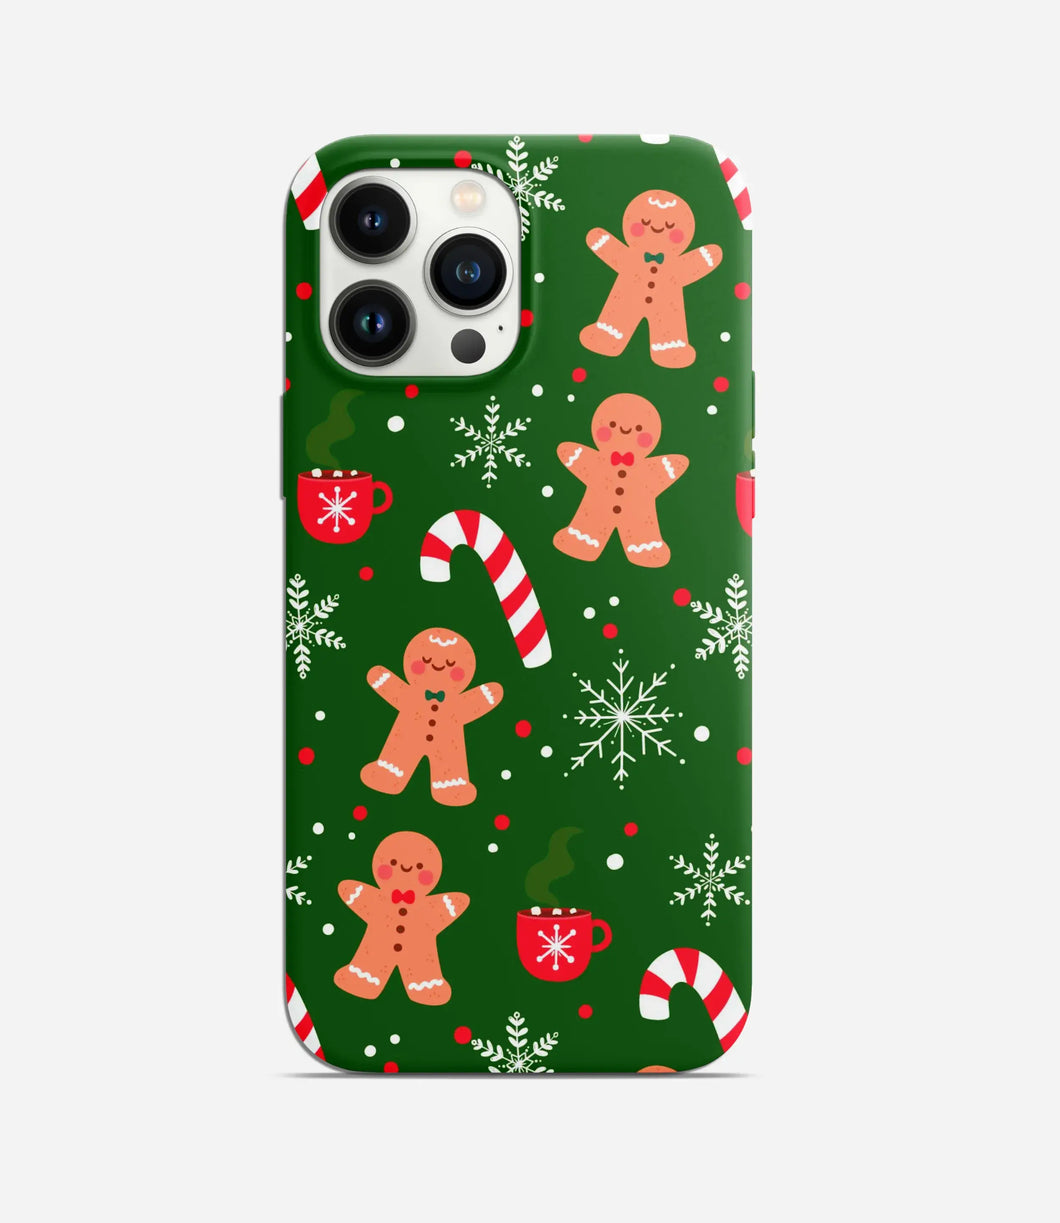 Gumdrops Guardian Christmas Hard Phone Case